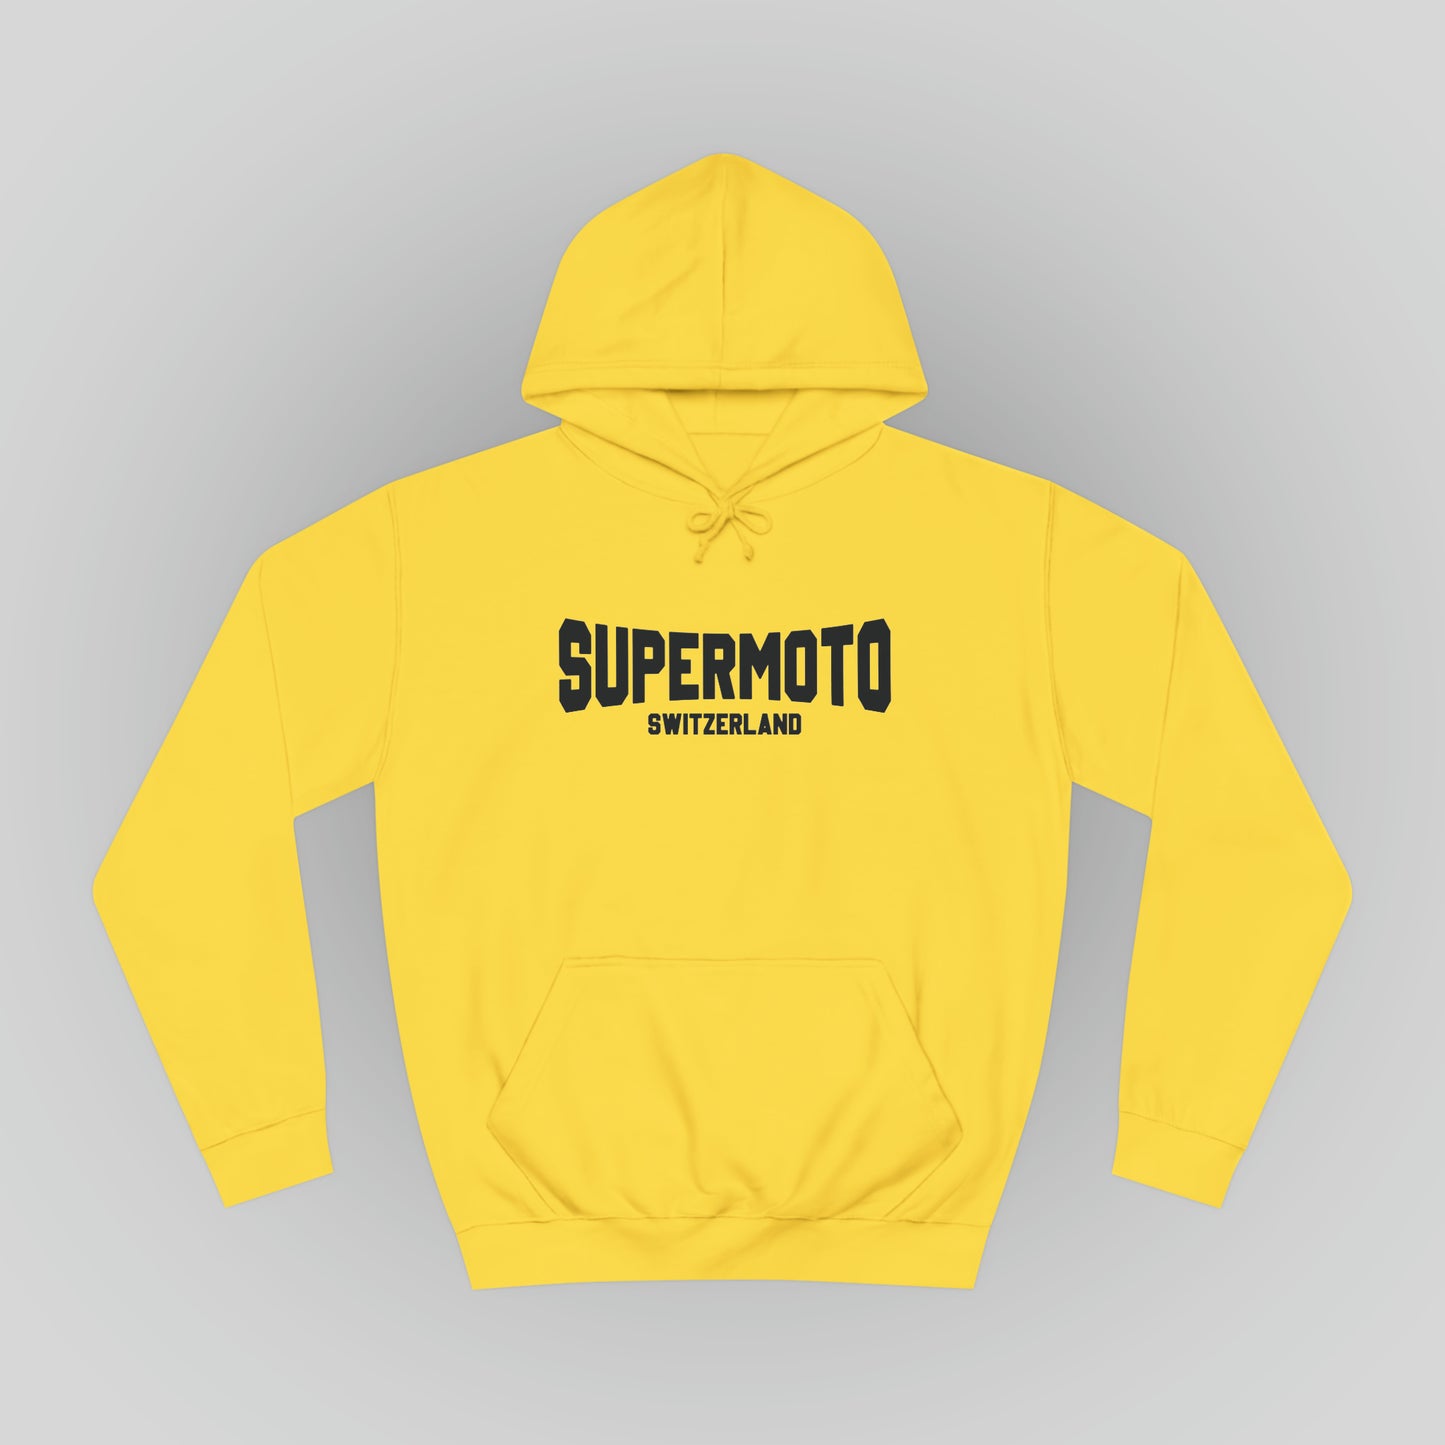 Supermoto Hoodie "SUPERMOTO SWITZERLAND"